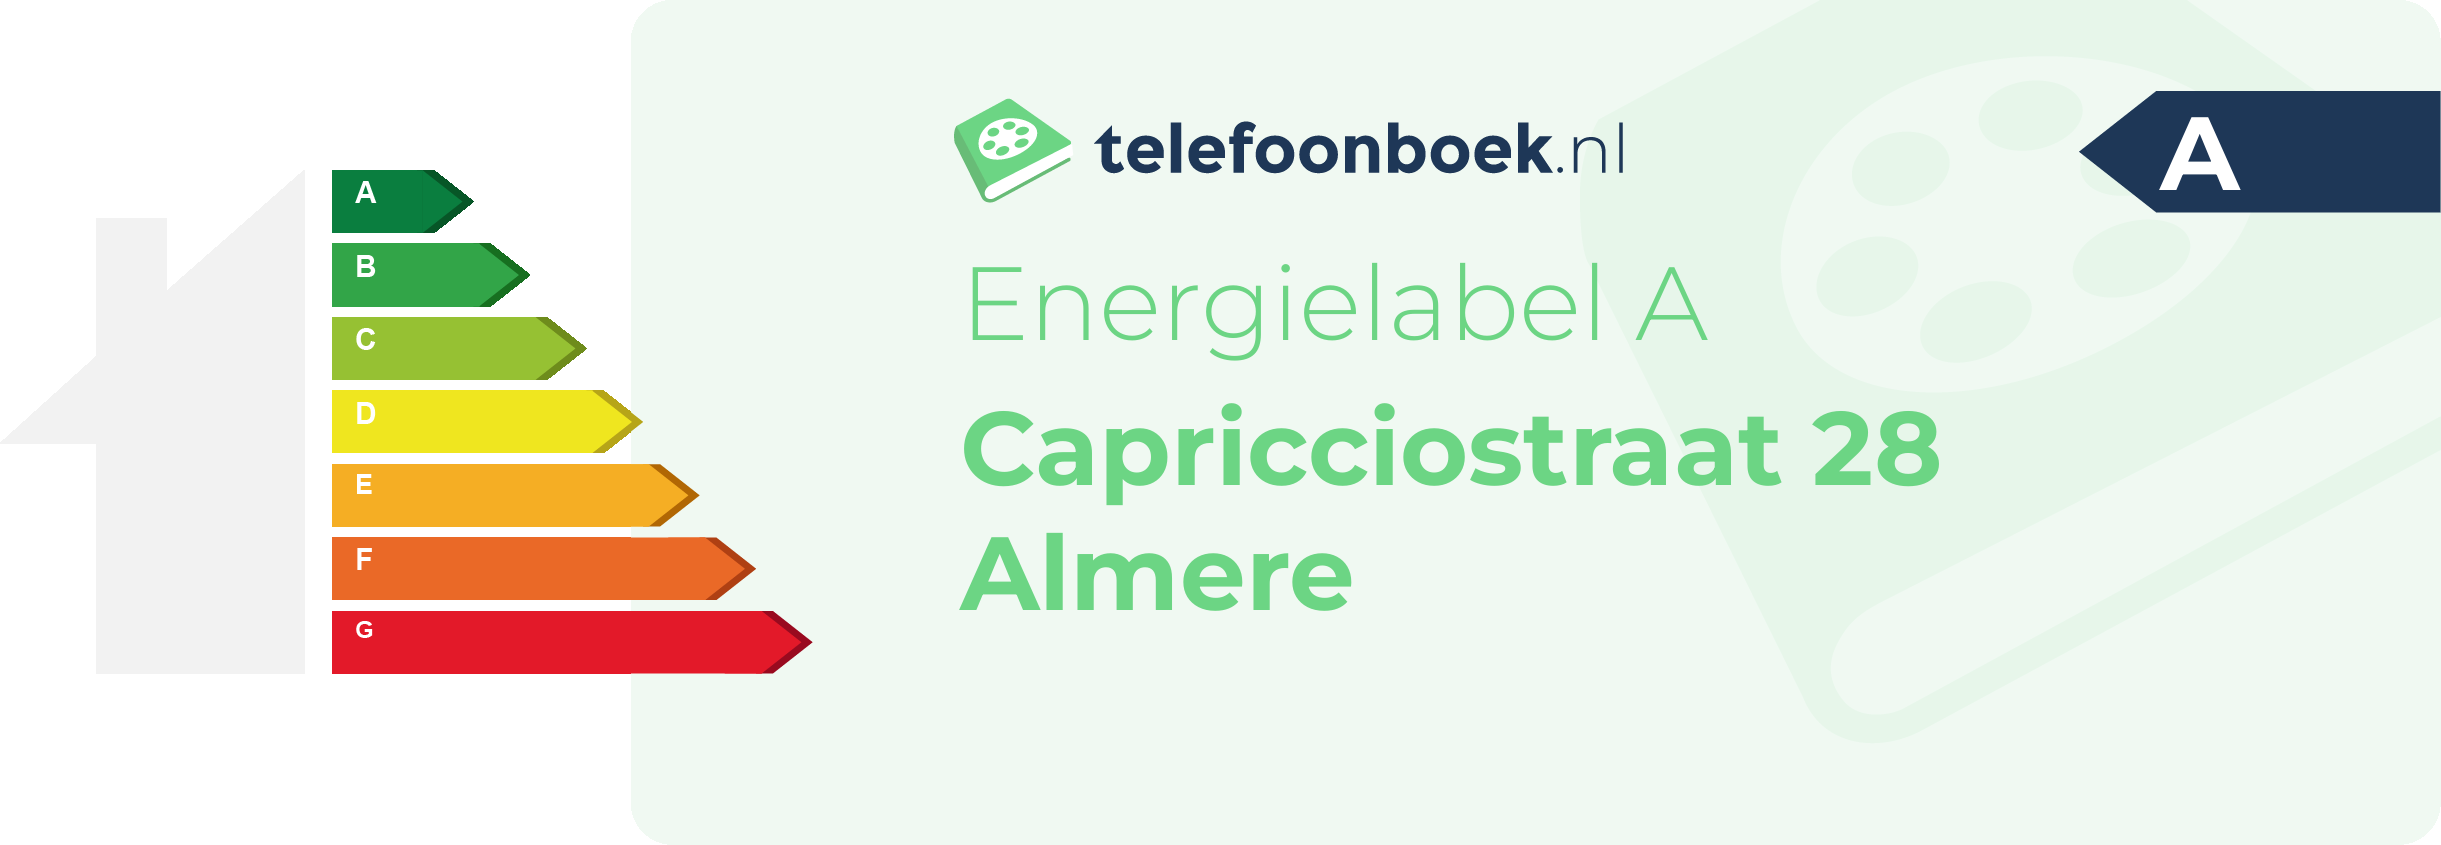 Energielabel Capricciostraat 28 Almere